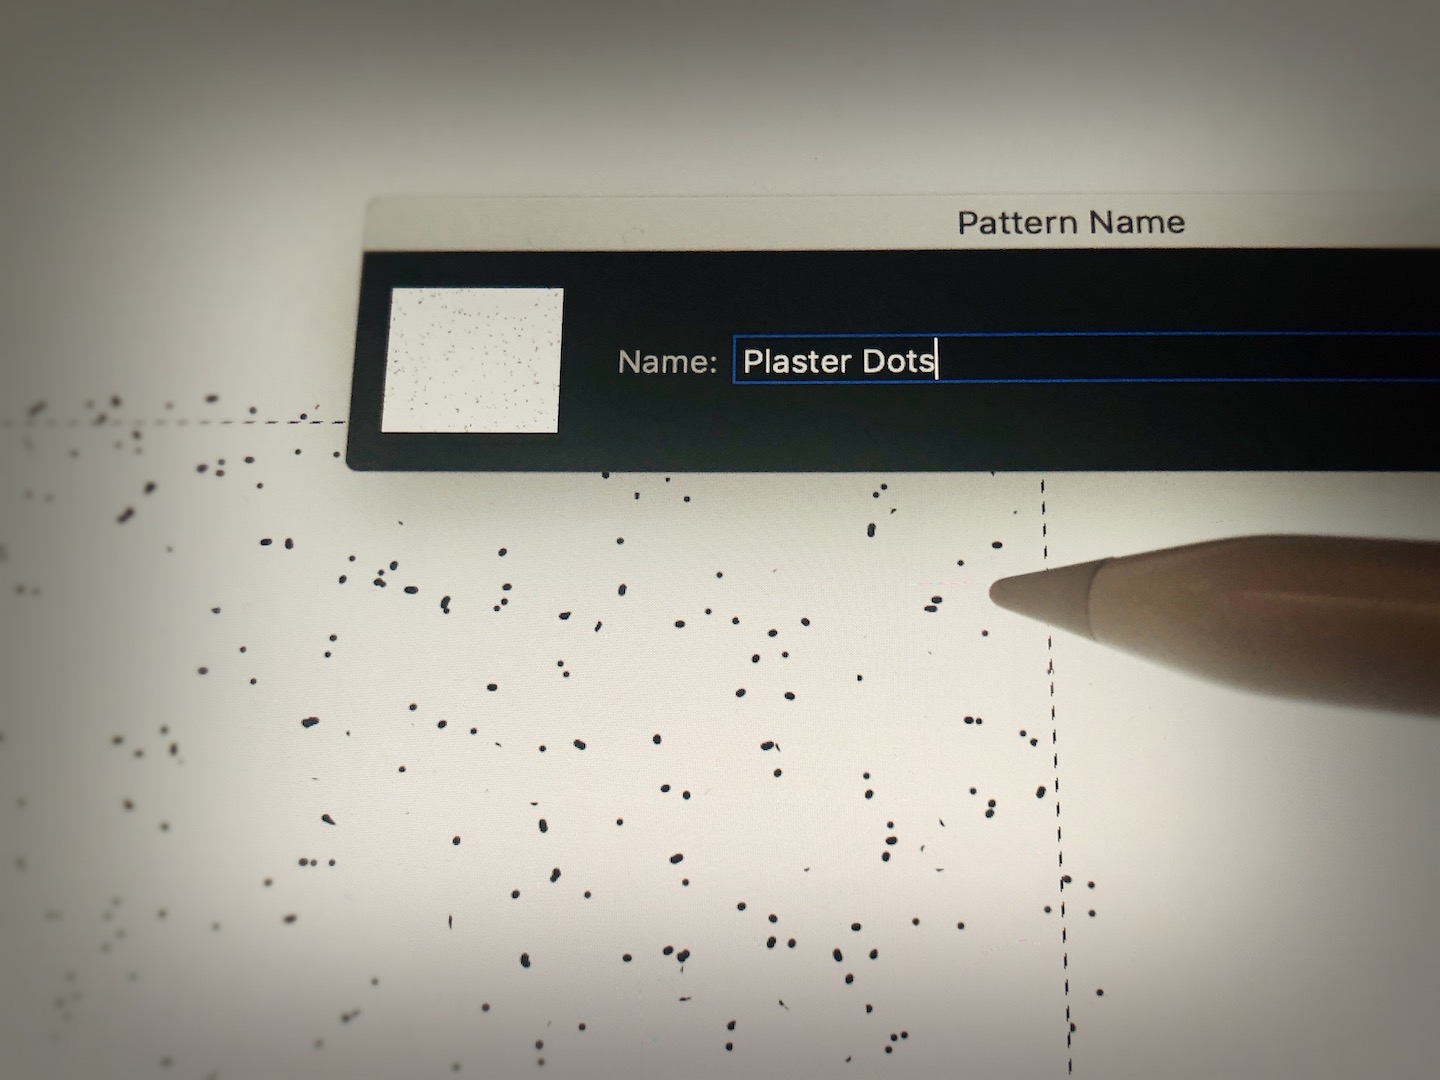 Creating custom plaster patterns for digital inking